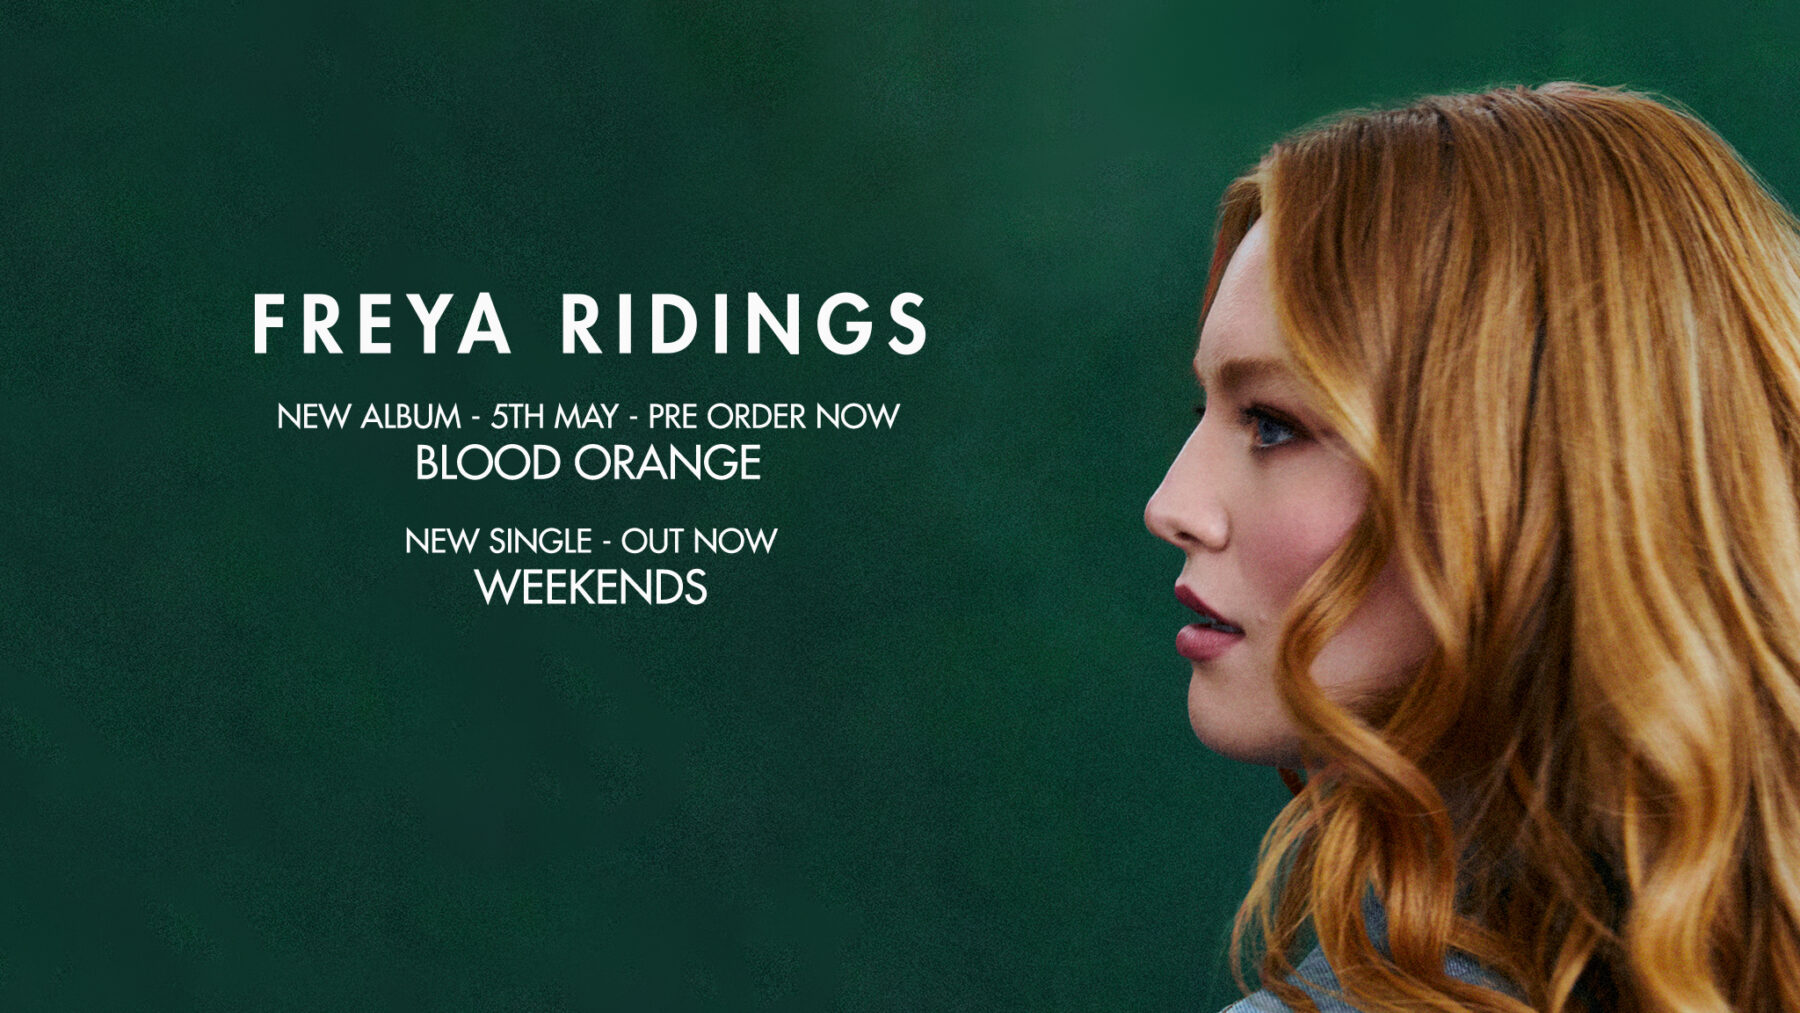 Freya Ridings new album new single